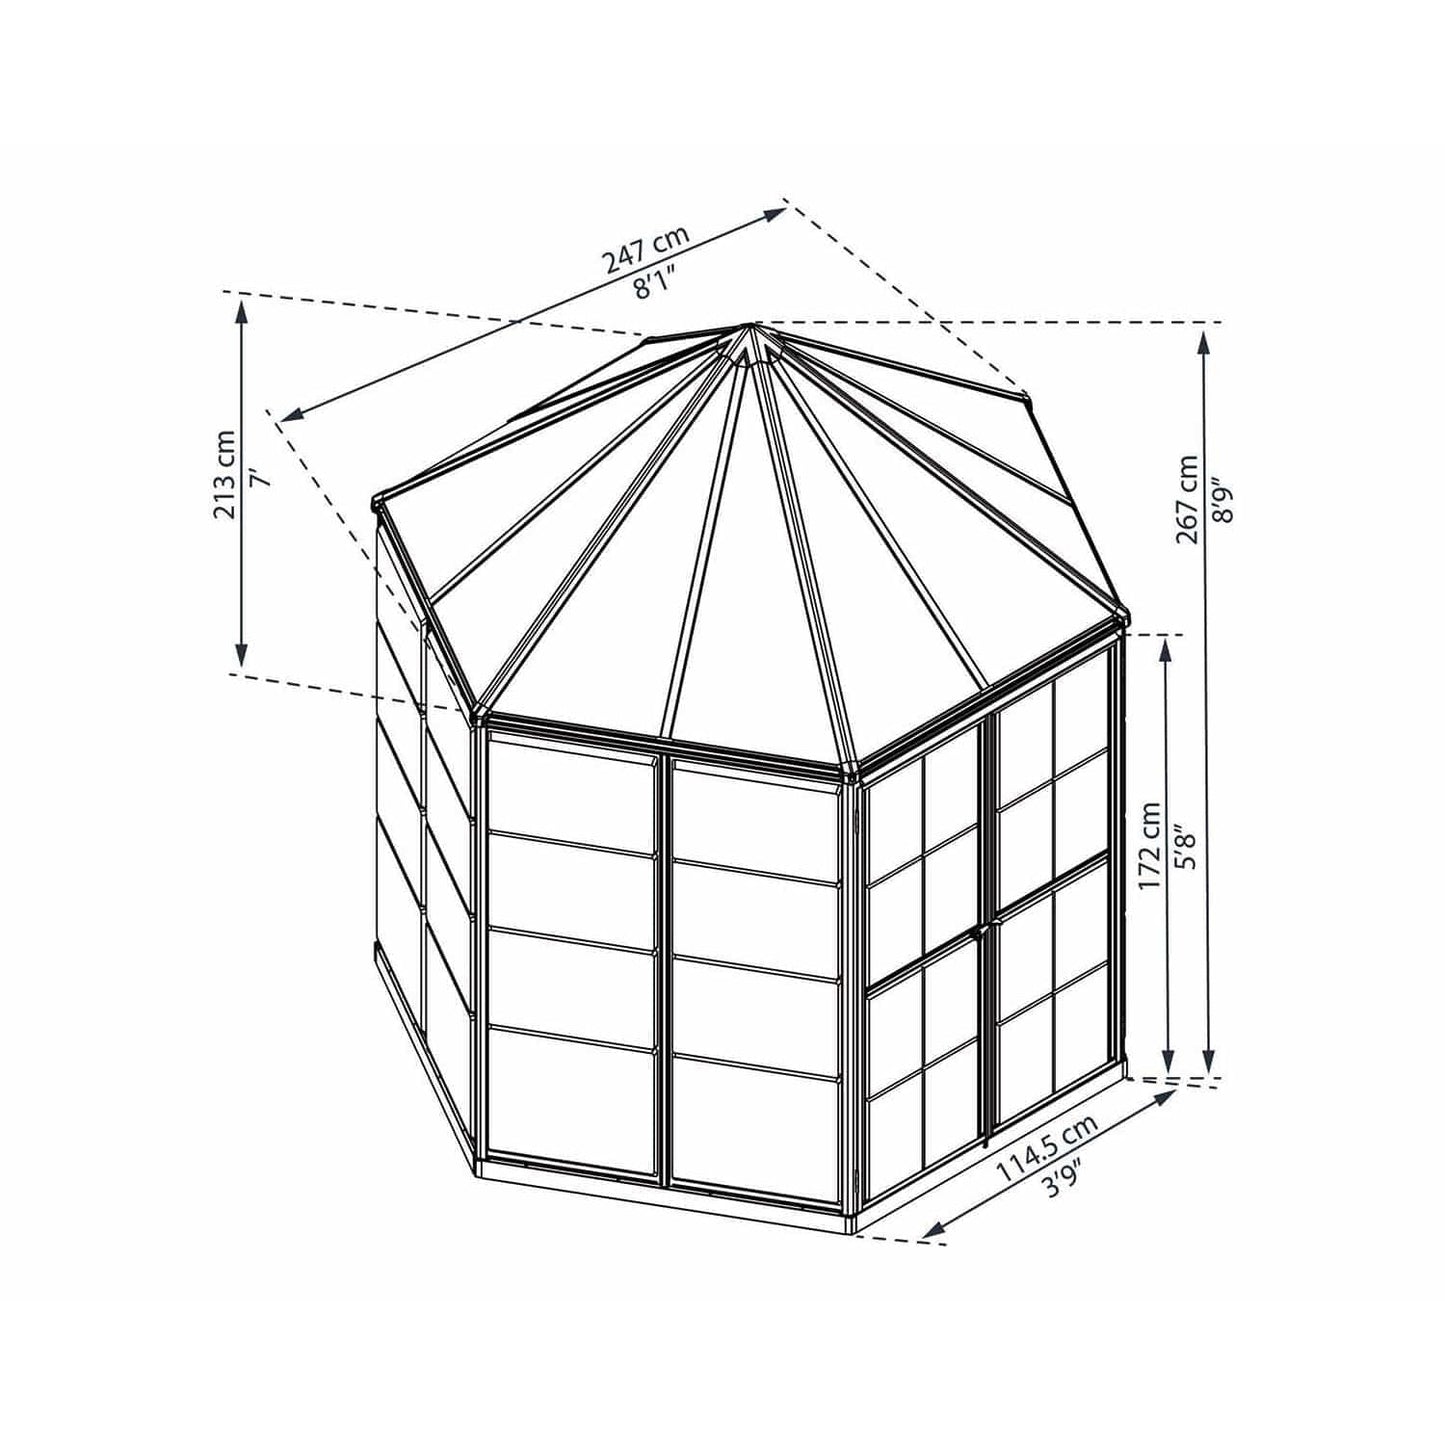 Oasis Hexagonal Greenhouse 8 ft. | Palram-Canopia - Delightful Yard